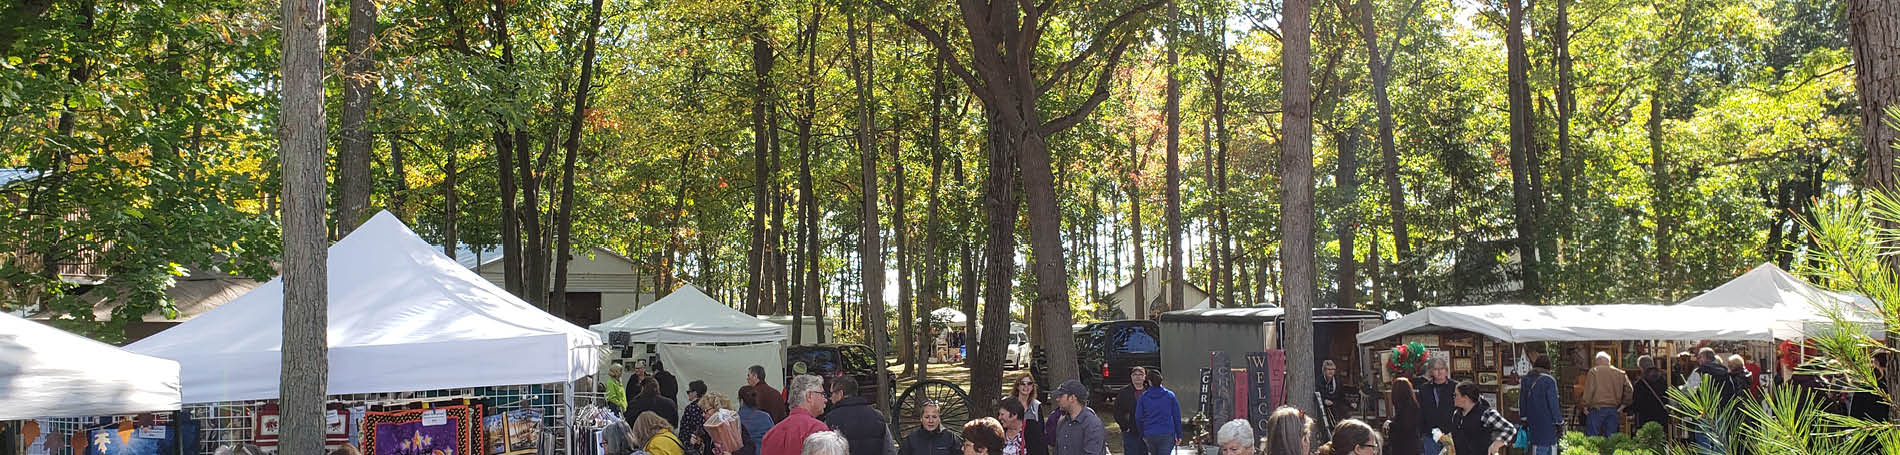 Visitors and vendor tents amongst the autumn oak savanna backdrop.